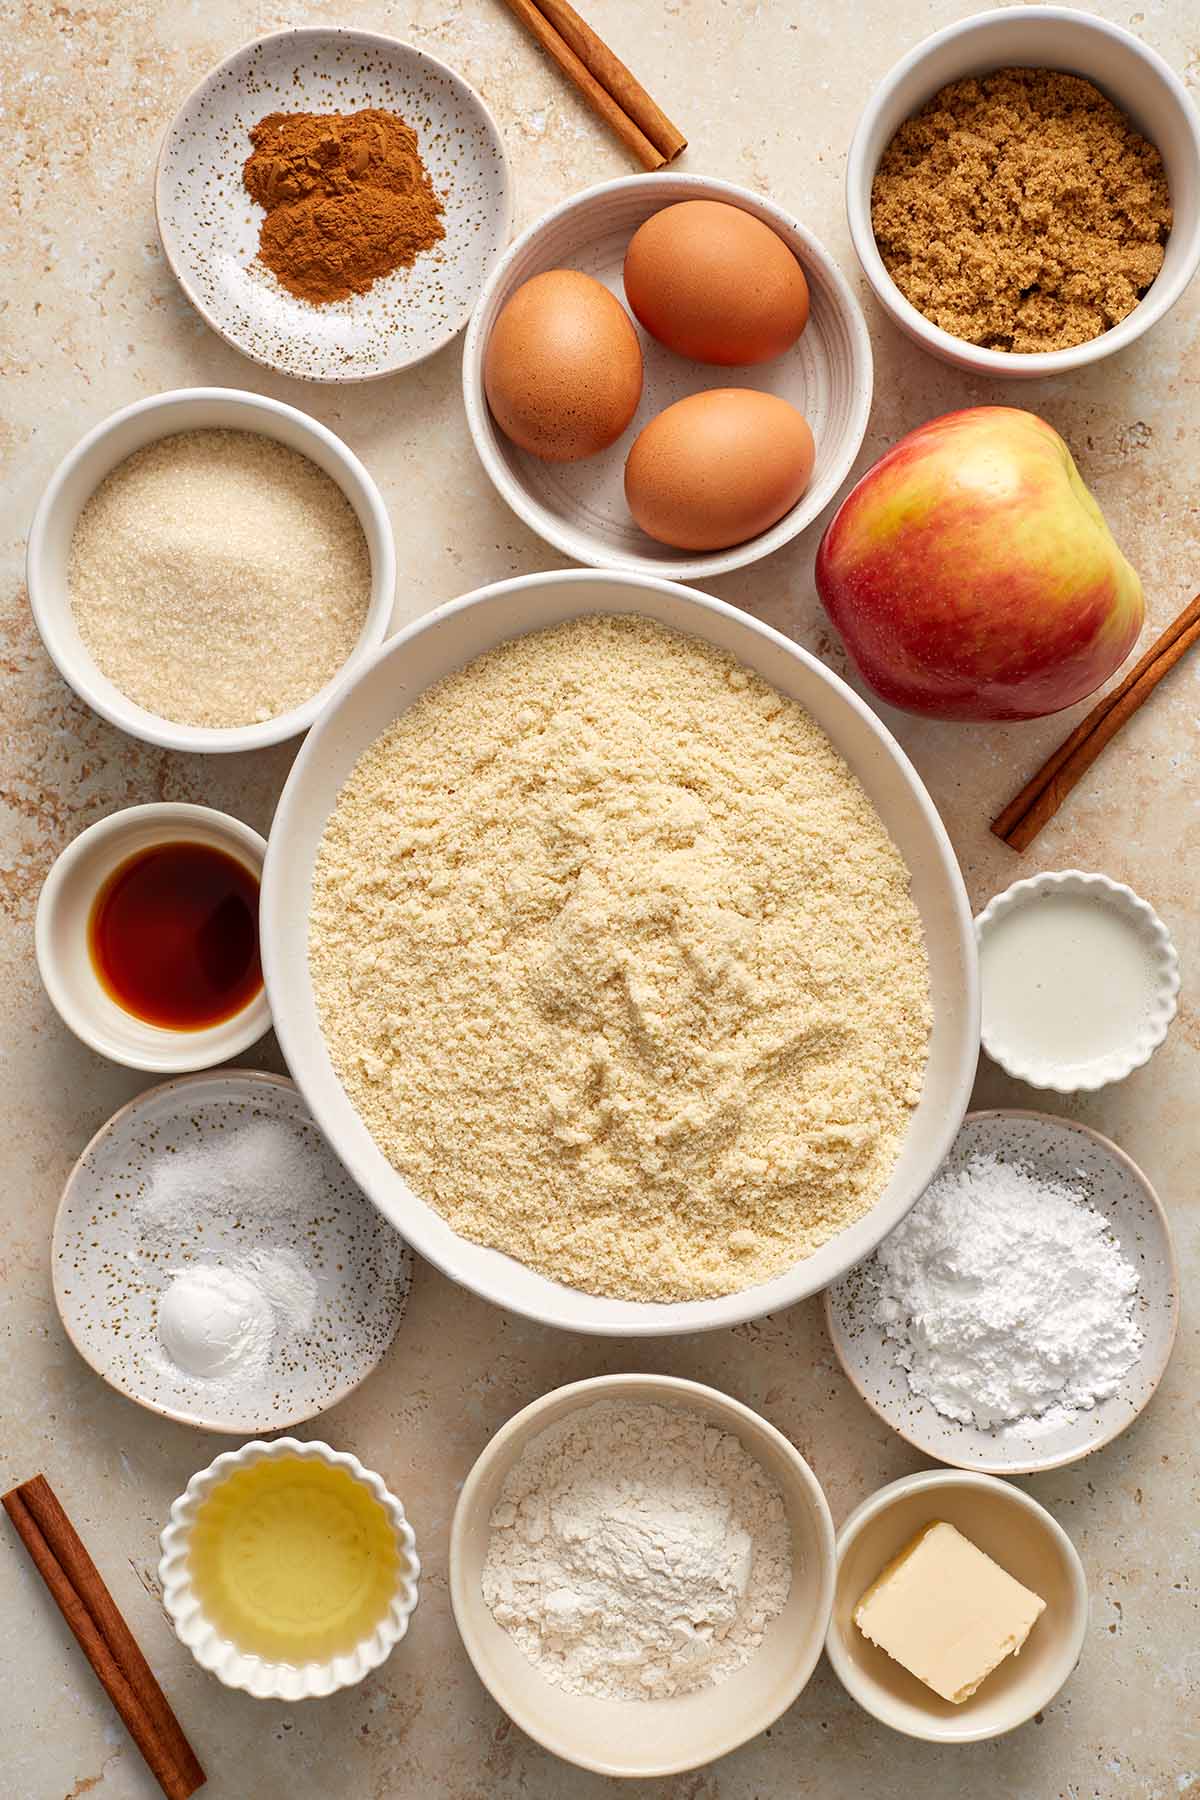 Ingredients to make almond flour apple cake arranged in individual bowls.